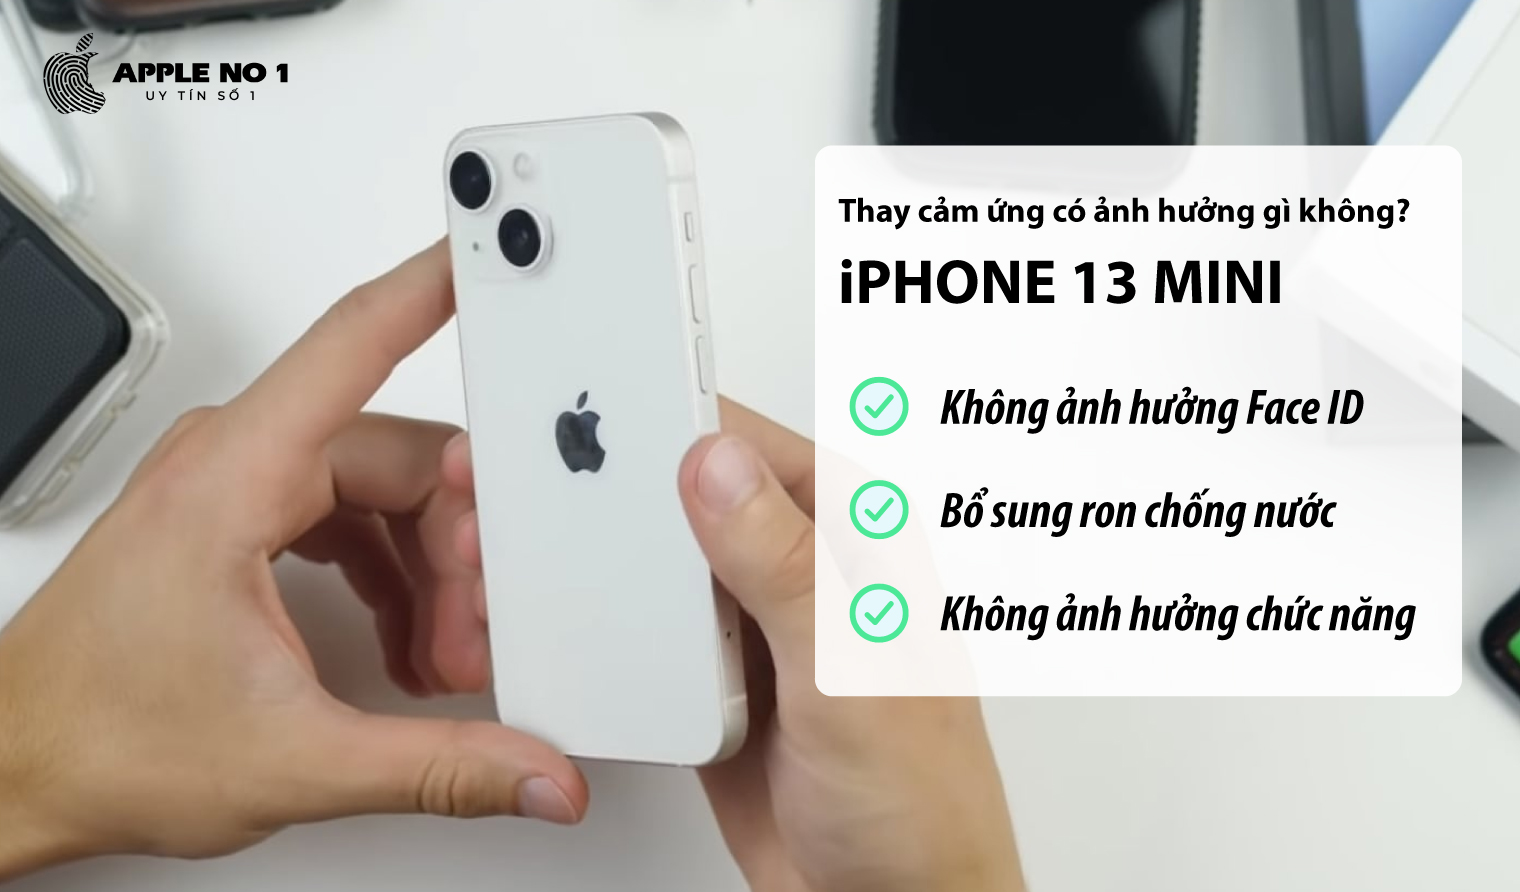 Thay cam ung iPhone 13 Mini co bi mat tinh nang chong nuoc khong?